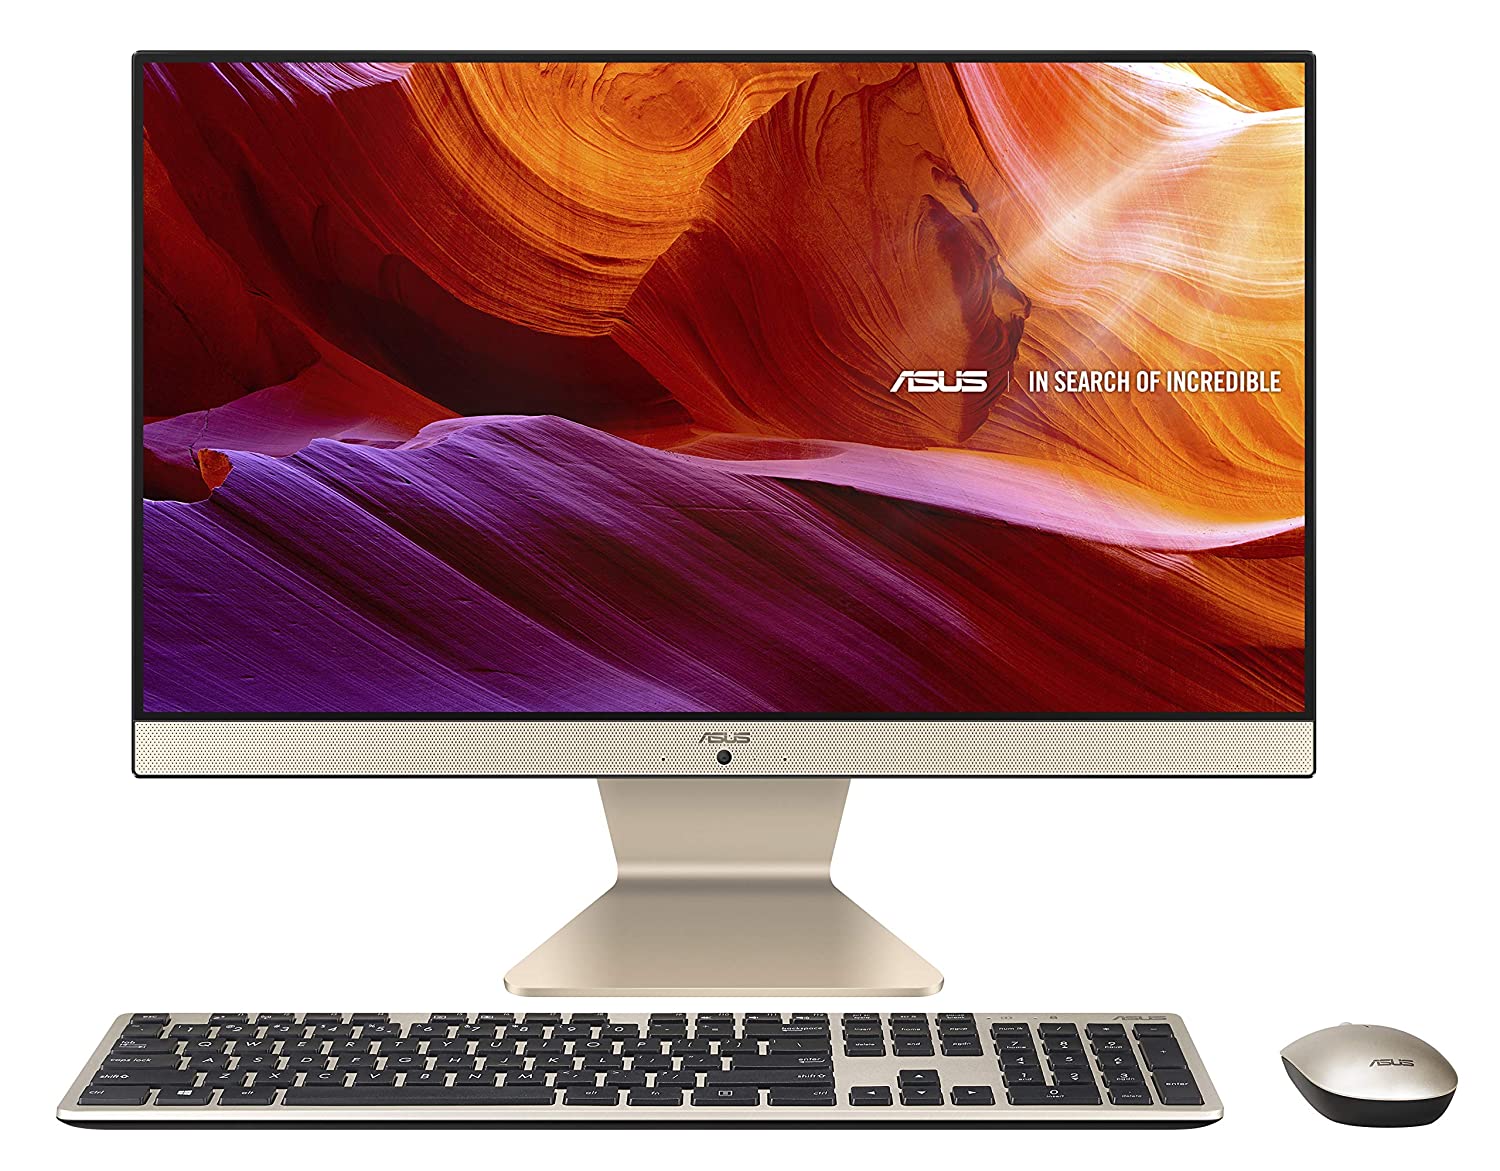 ASUS Vivo All-in-One Desktop